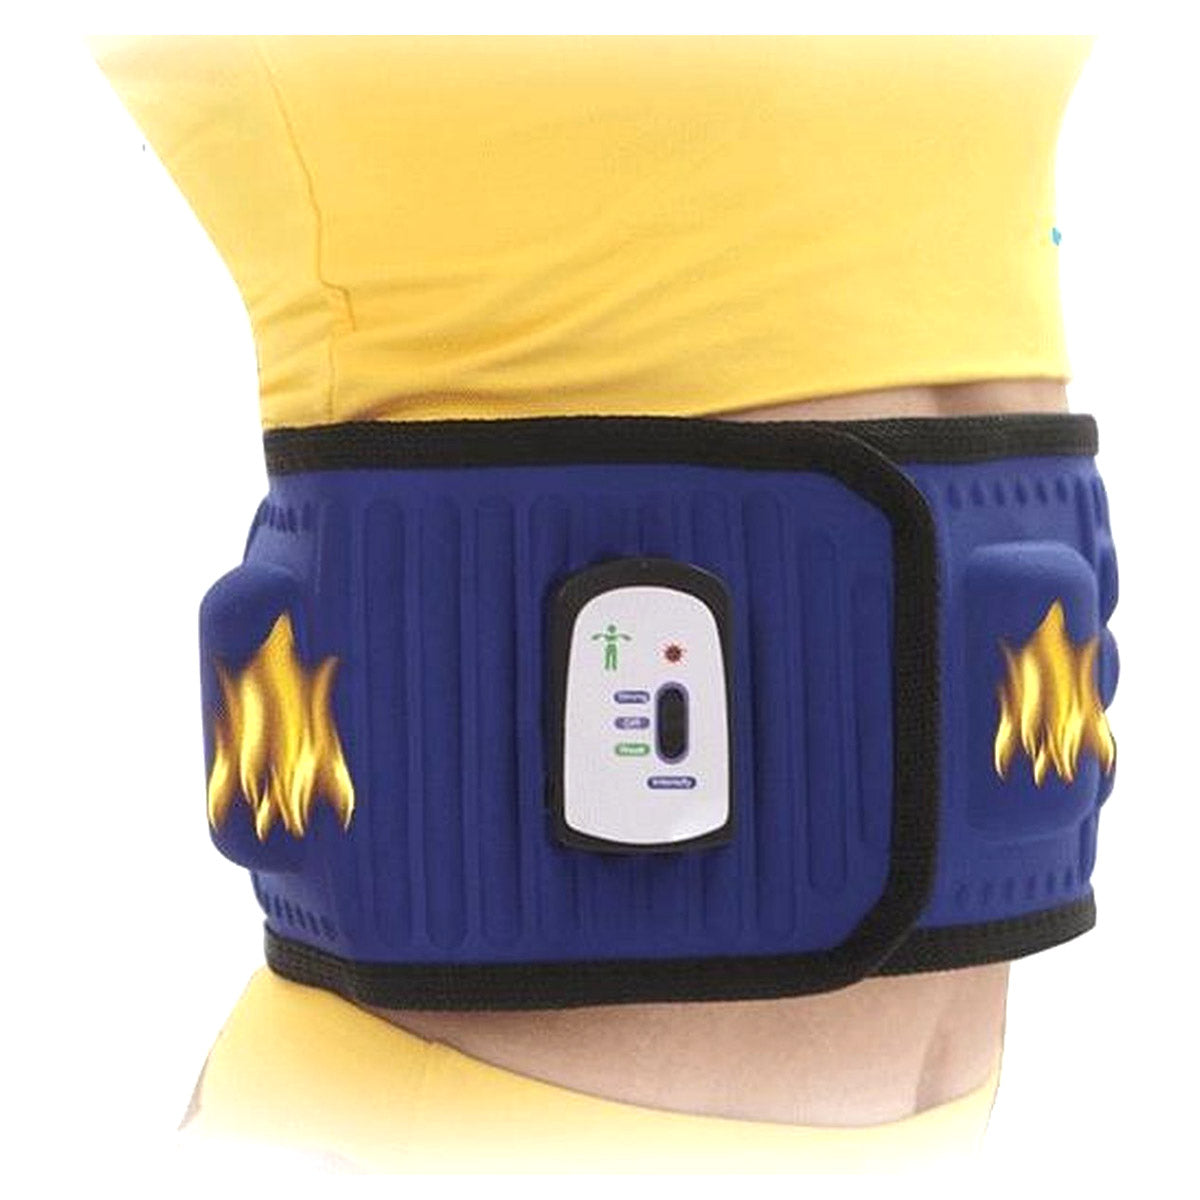 <tc>Ariko</tc> - Infrared massage device